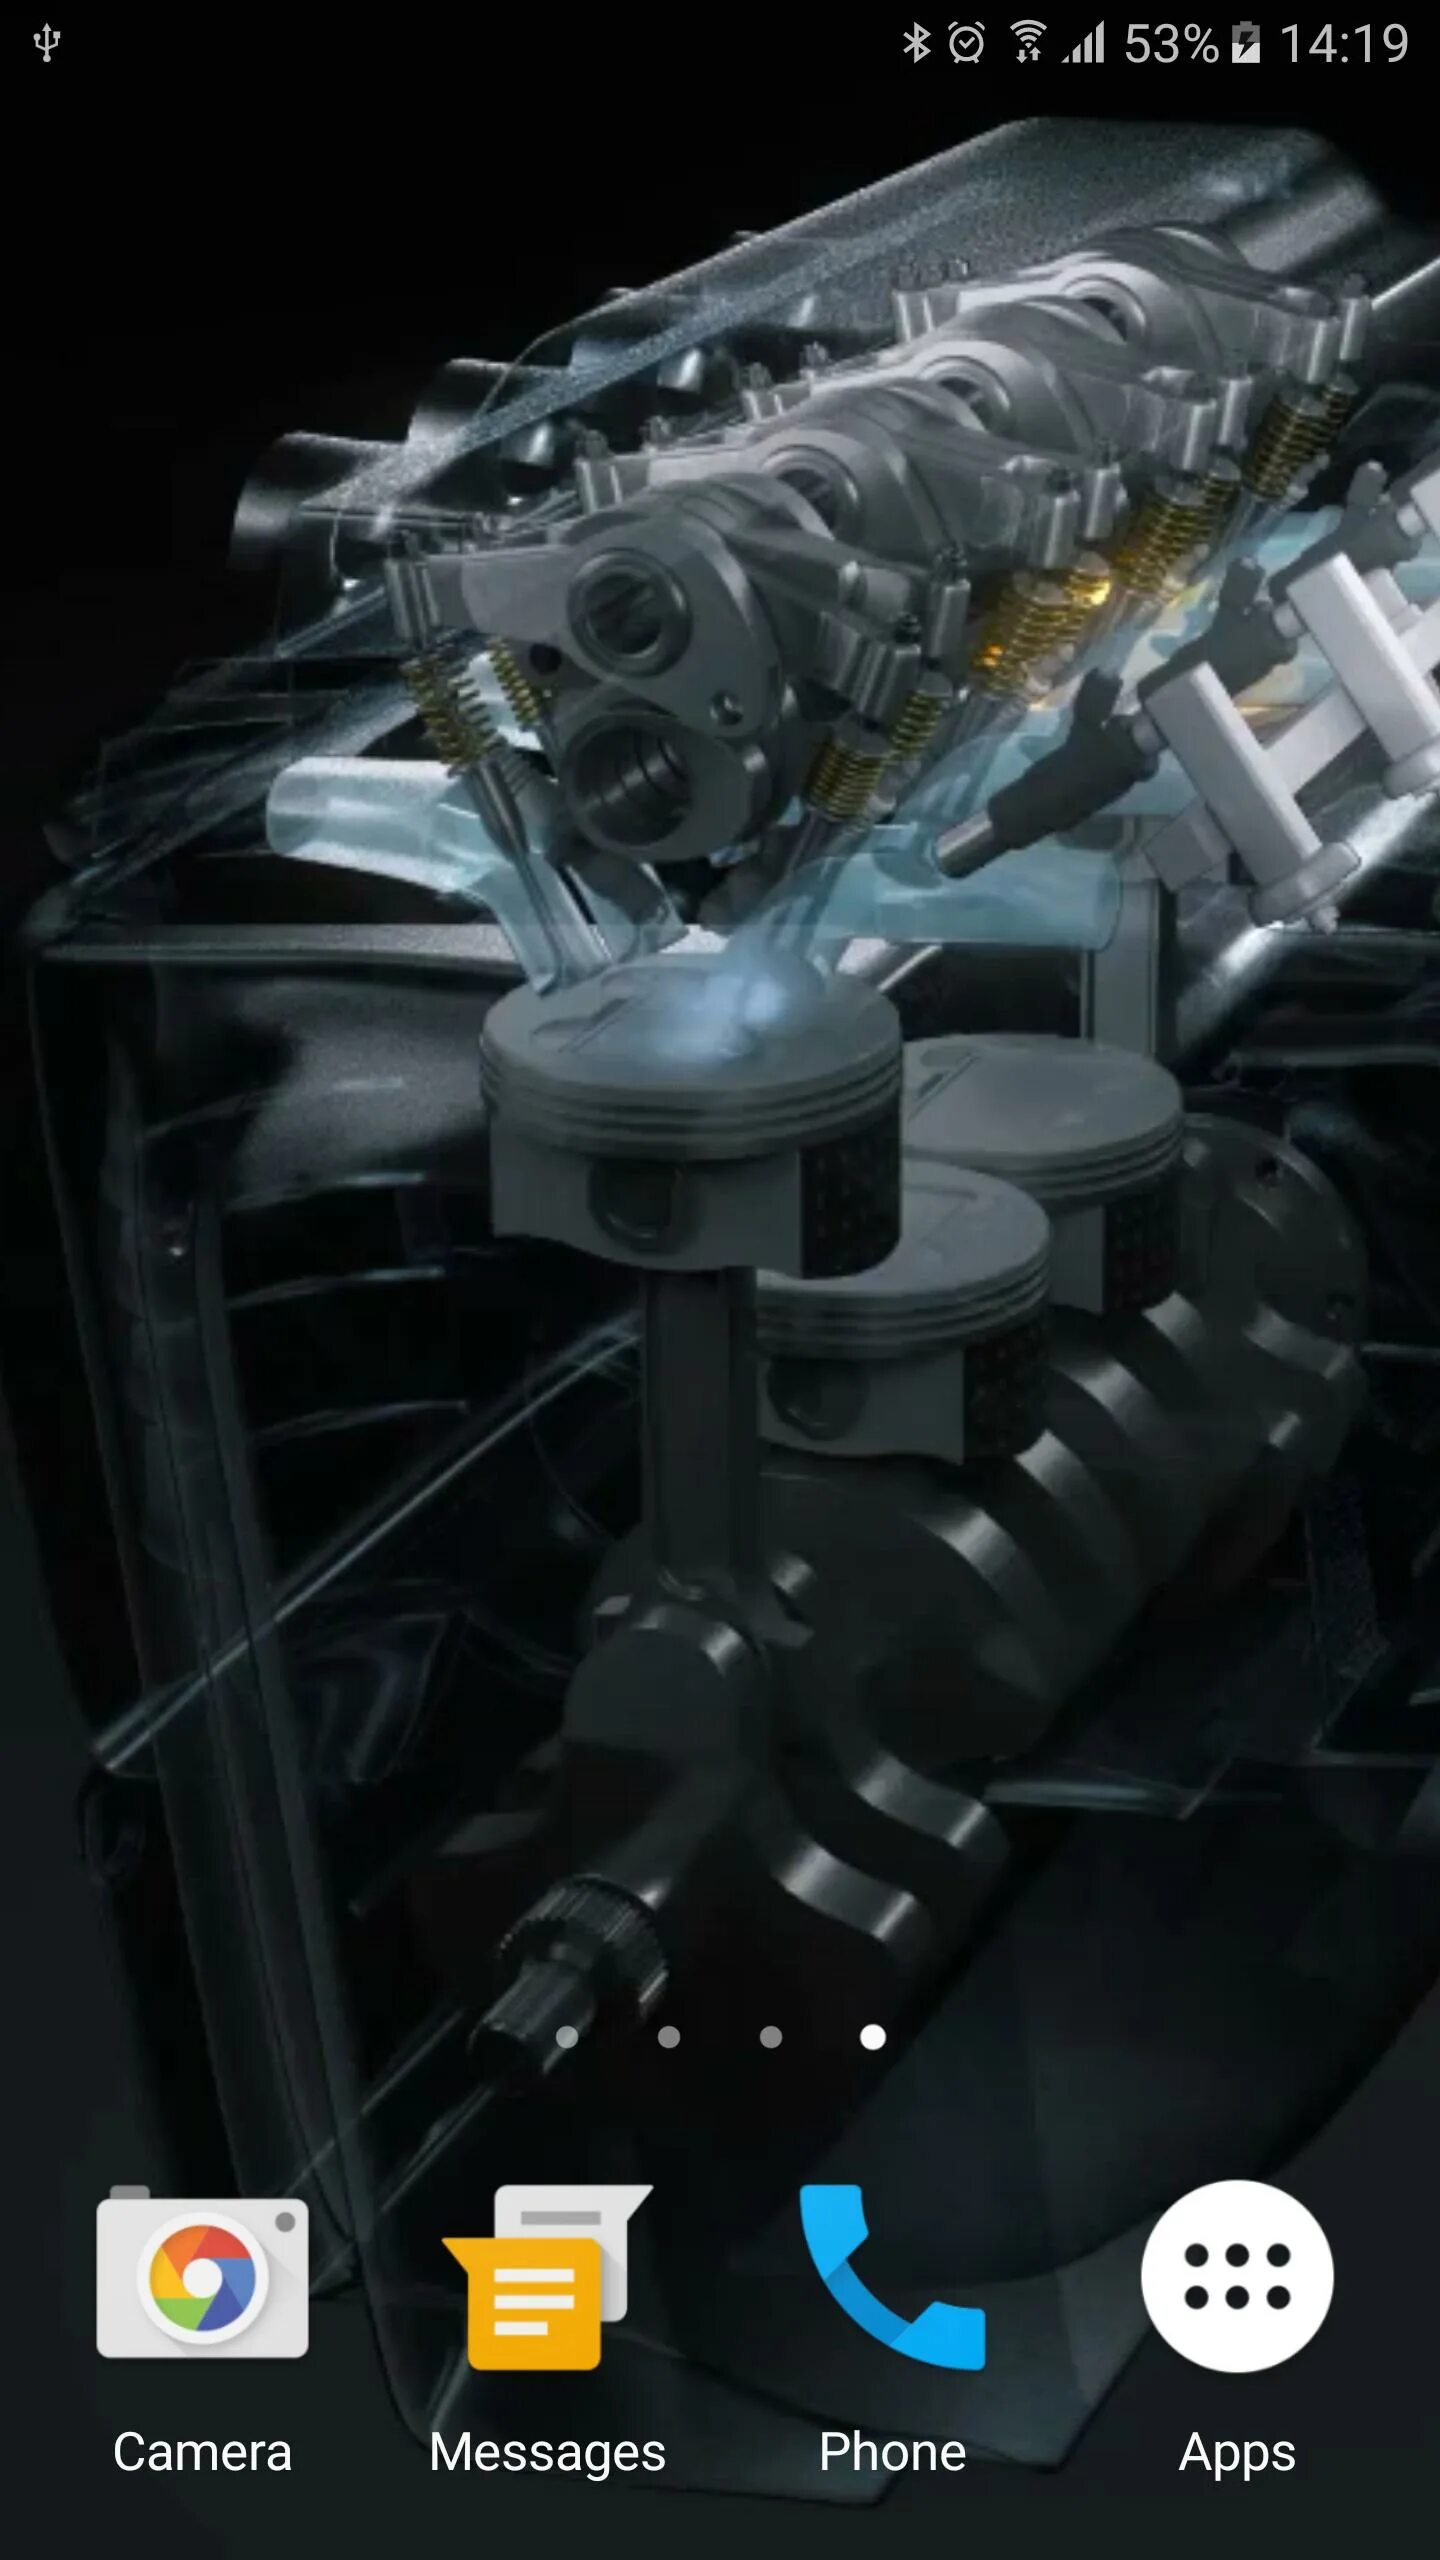 Двигатель д3. ДВС андроид. Живые обои ДВС для андроид. Wallpaper engine на андроид. Тема на телефон андроид моторы.